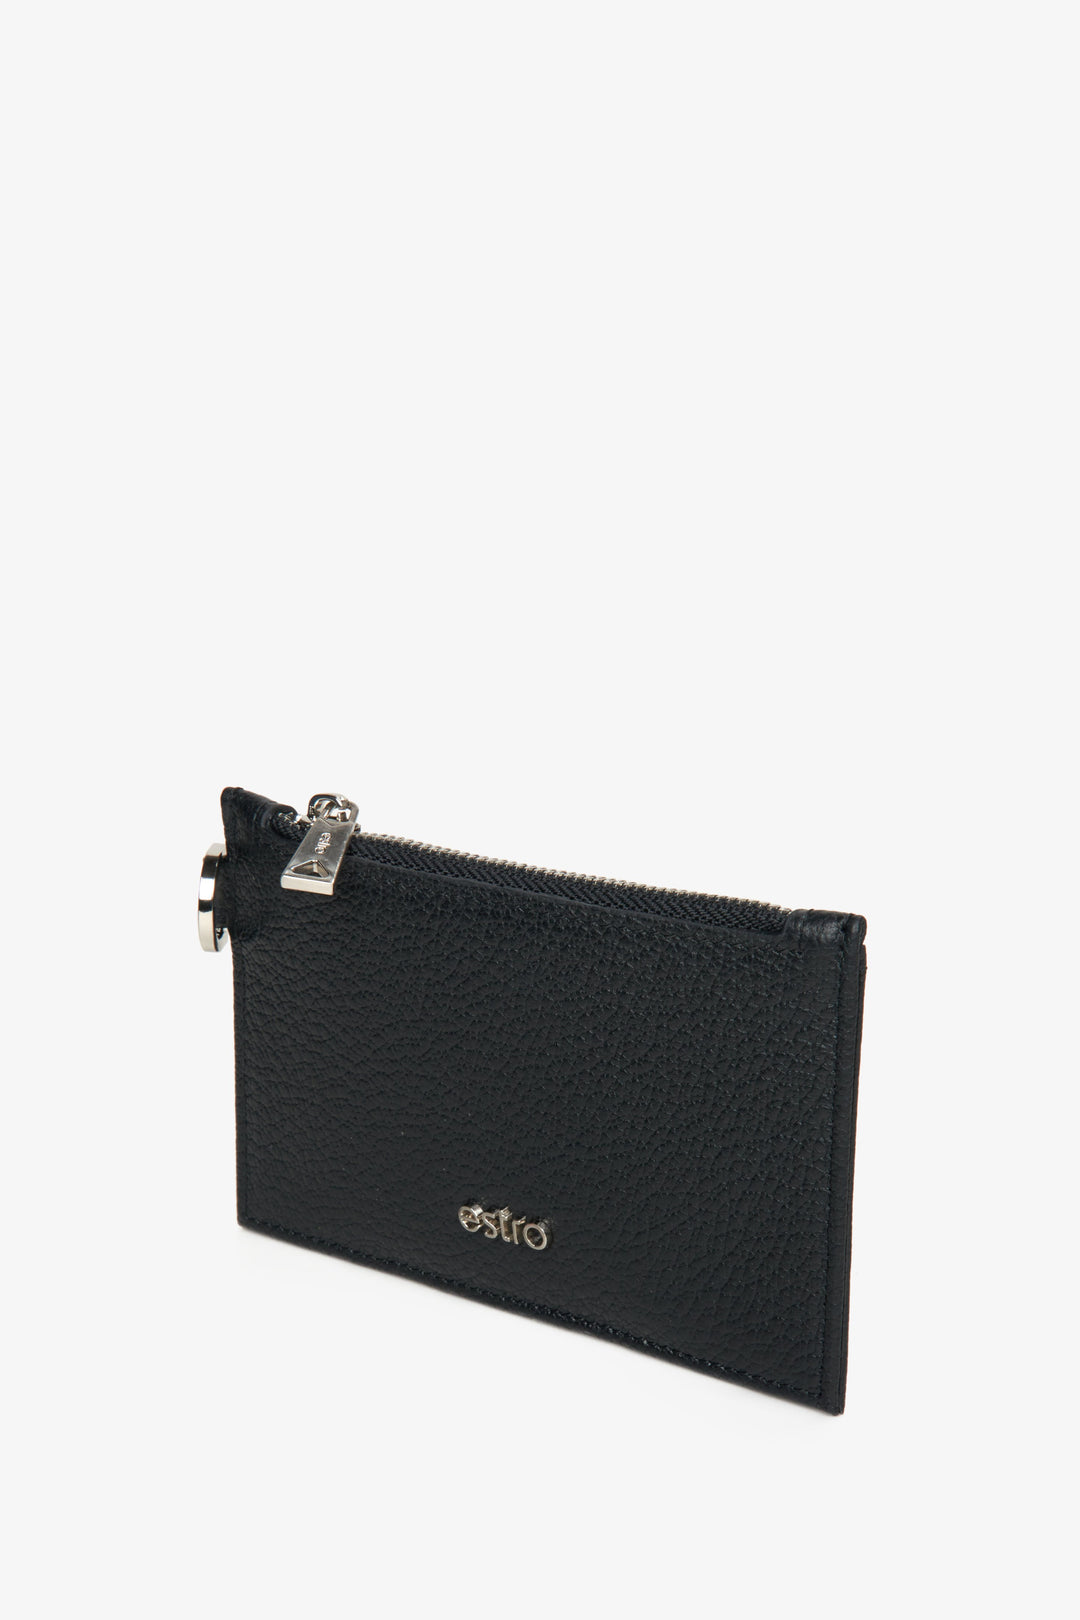 Men's black pouch-style wallet by Estro.